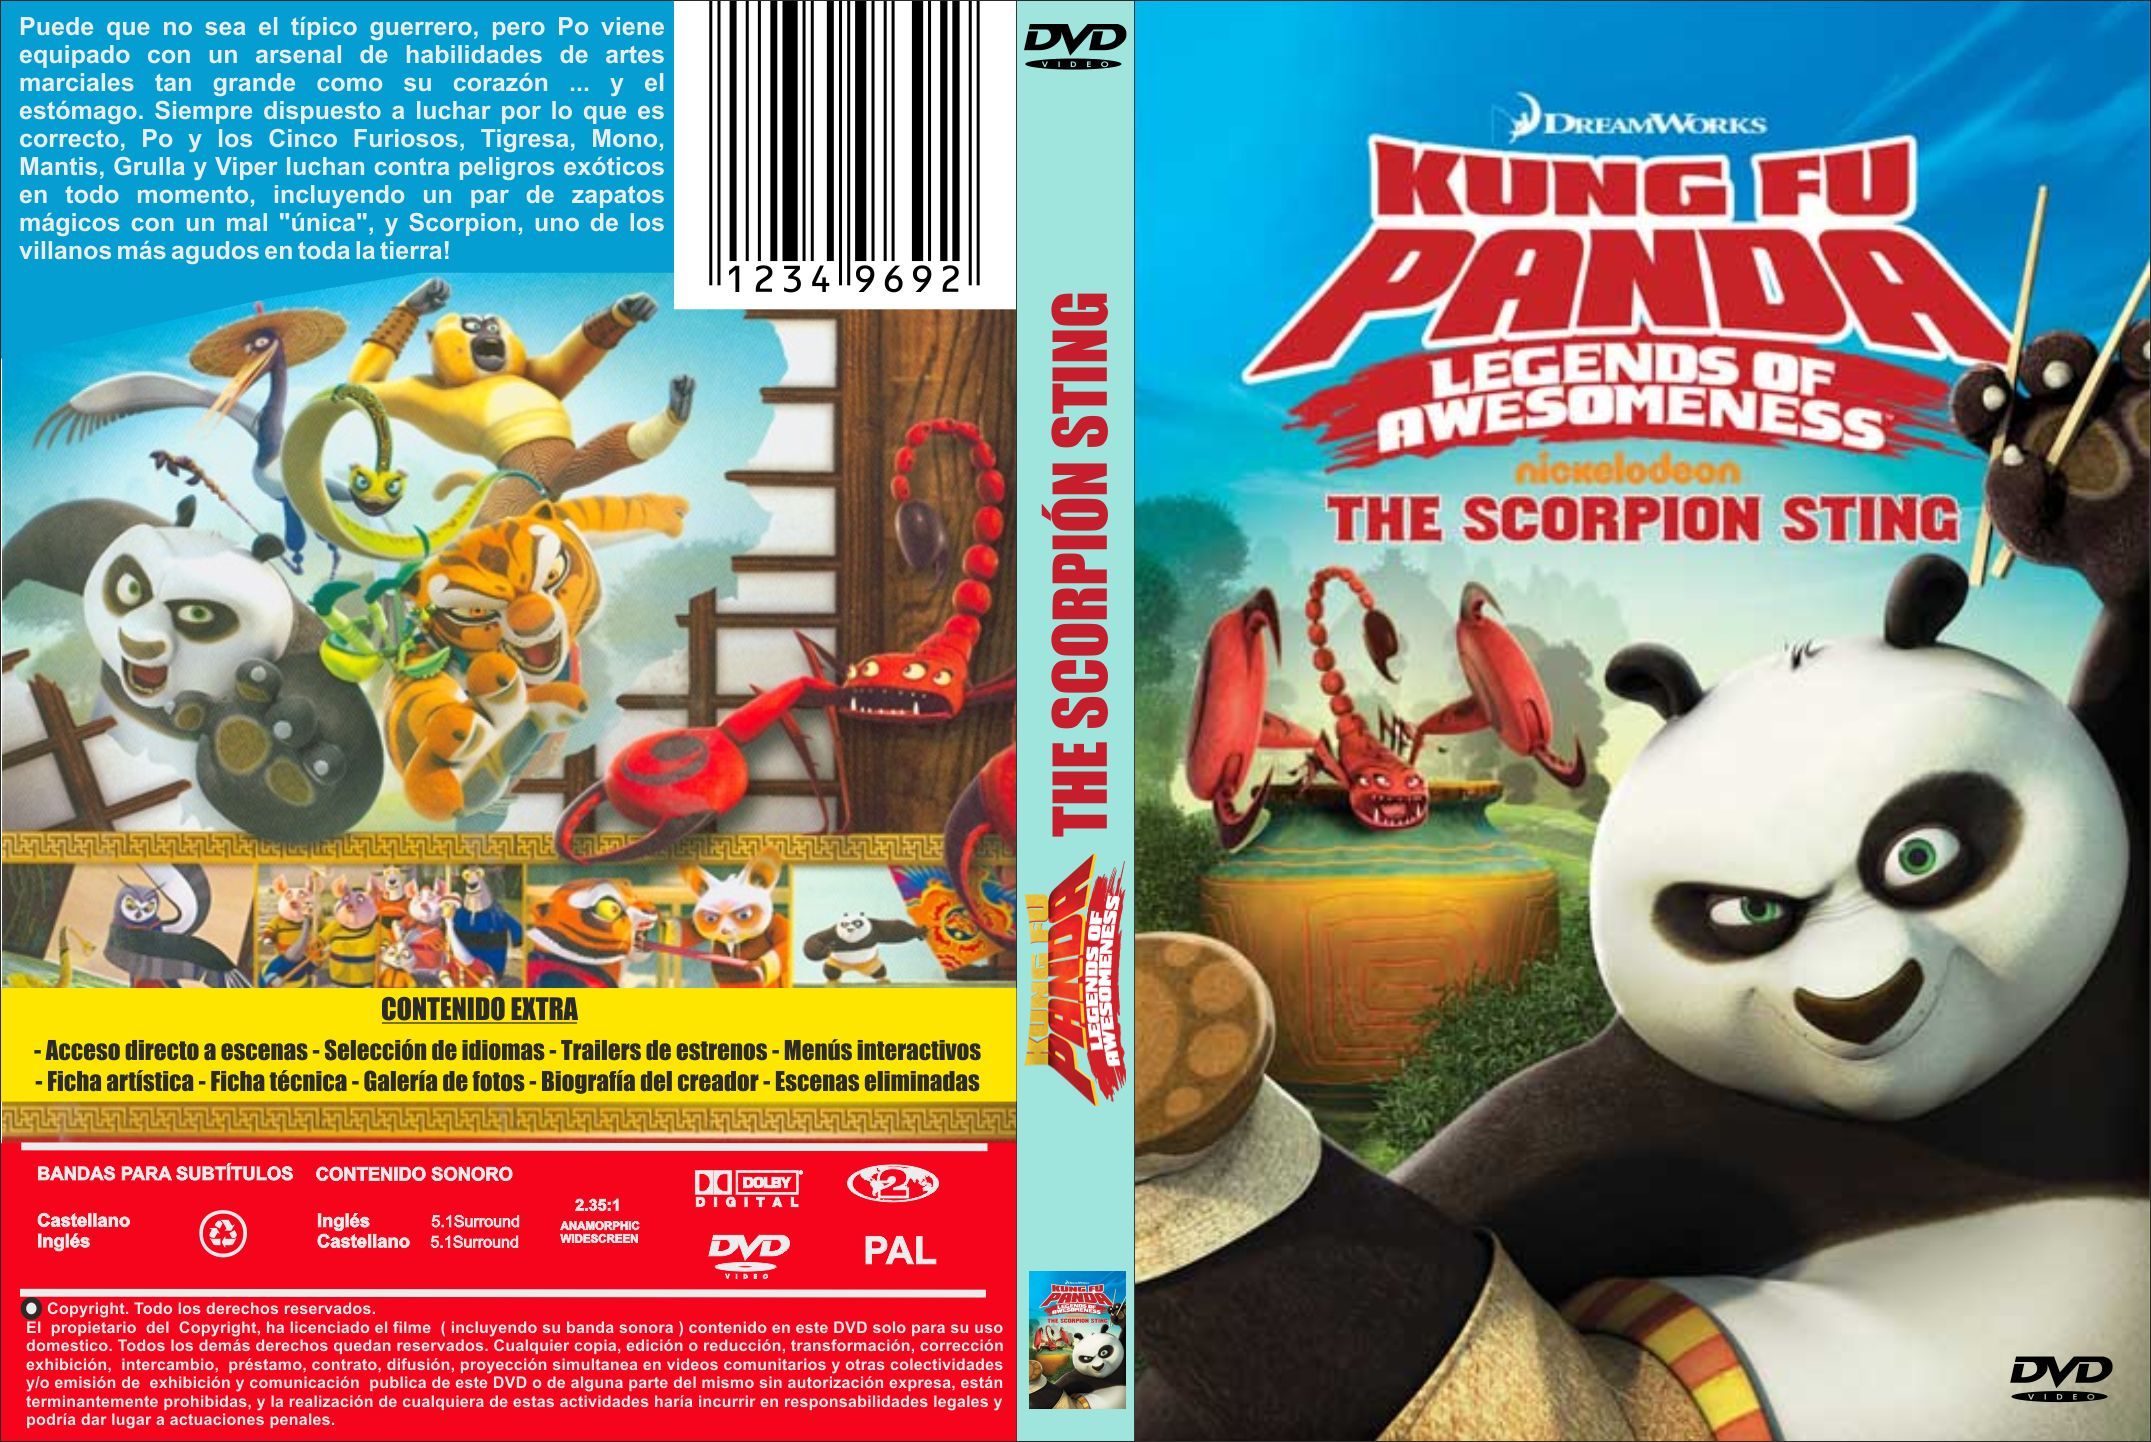 Kung_Fu_Panda_-_Legends_Of_Awesomeness_-_The_Scorpion_Sting_-_Custom_por_jonander1__dvd__80.jpg